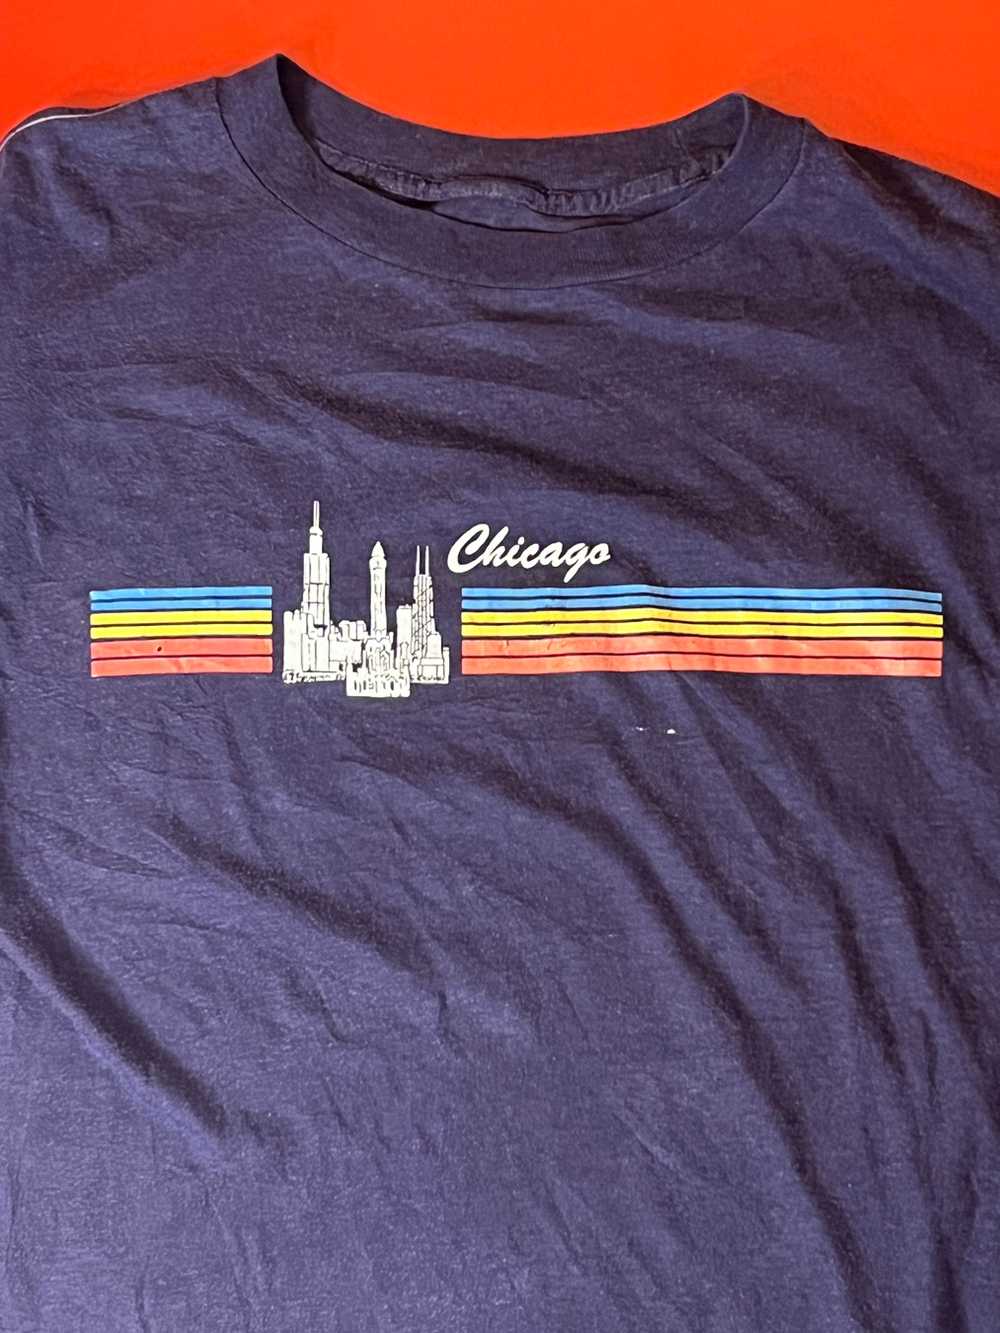 80’s Chicago Shirt - image 2